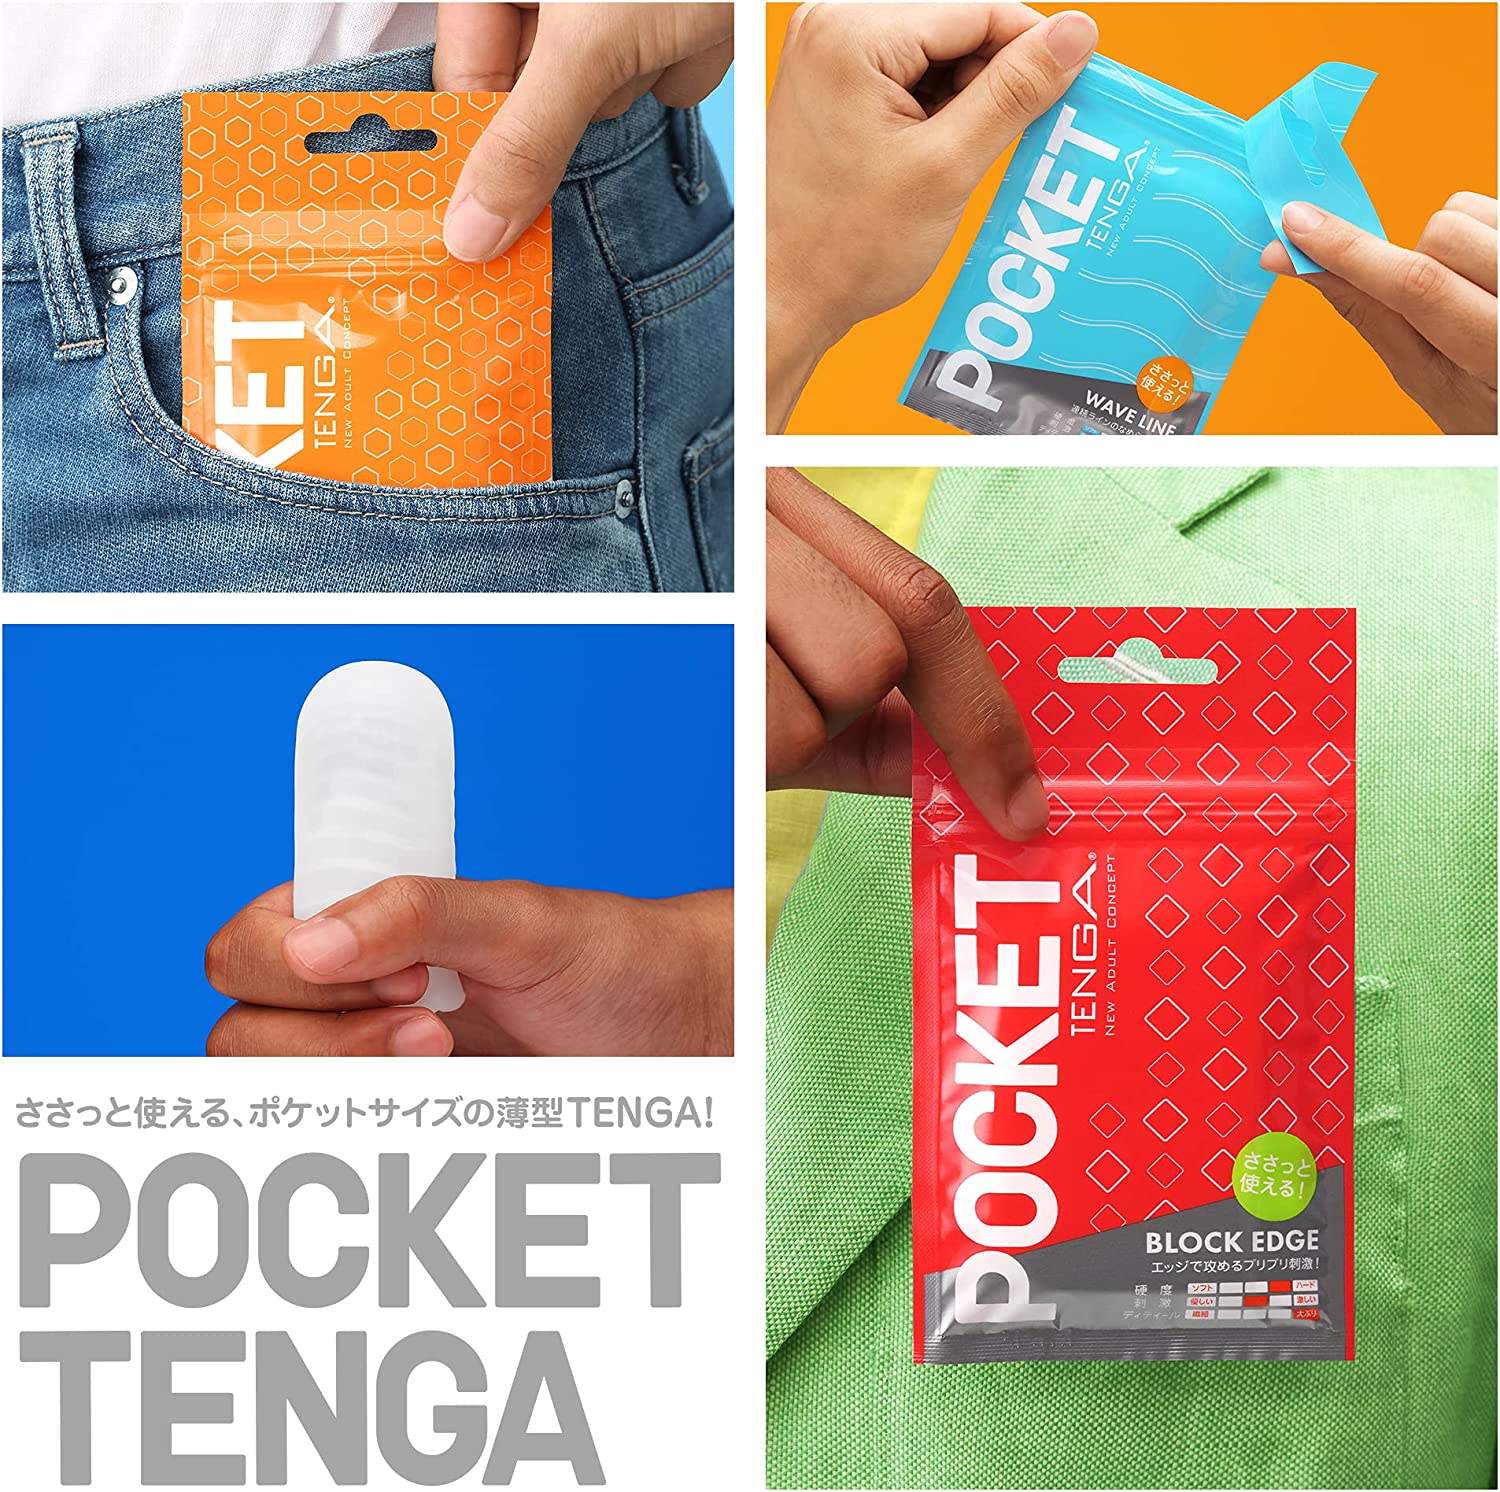 TENGA Pocket POT-002 Click Ball Male Masturbator,Green